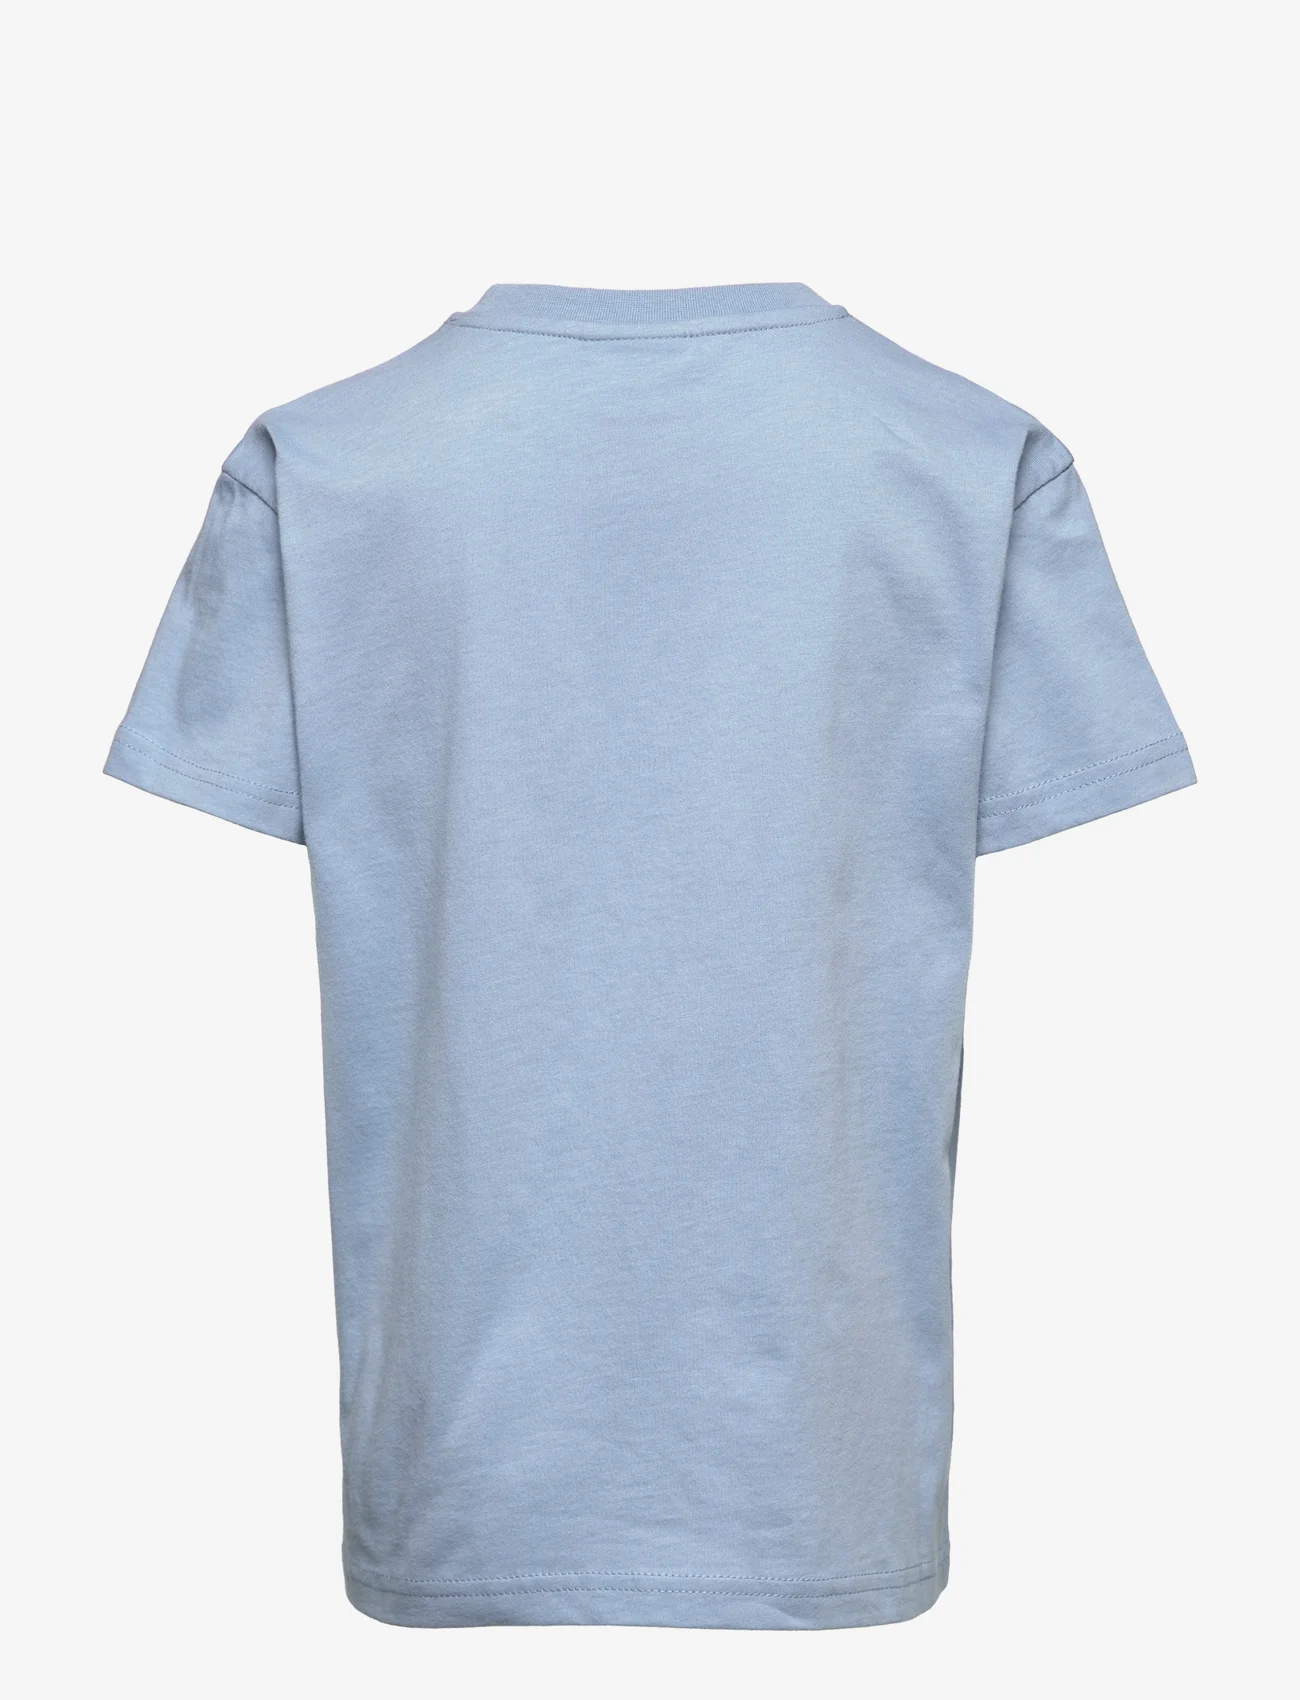 Sofie Schnoor Baby and Kids - T-shirt - kortermede t-skjorter - light blue - 1